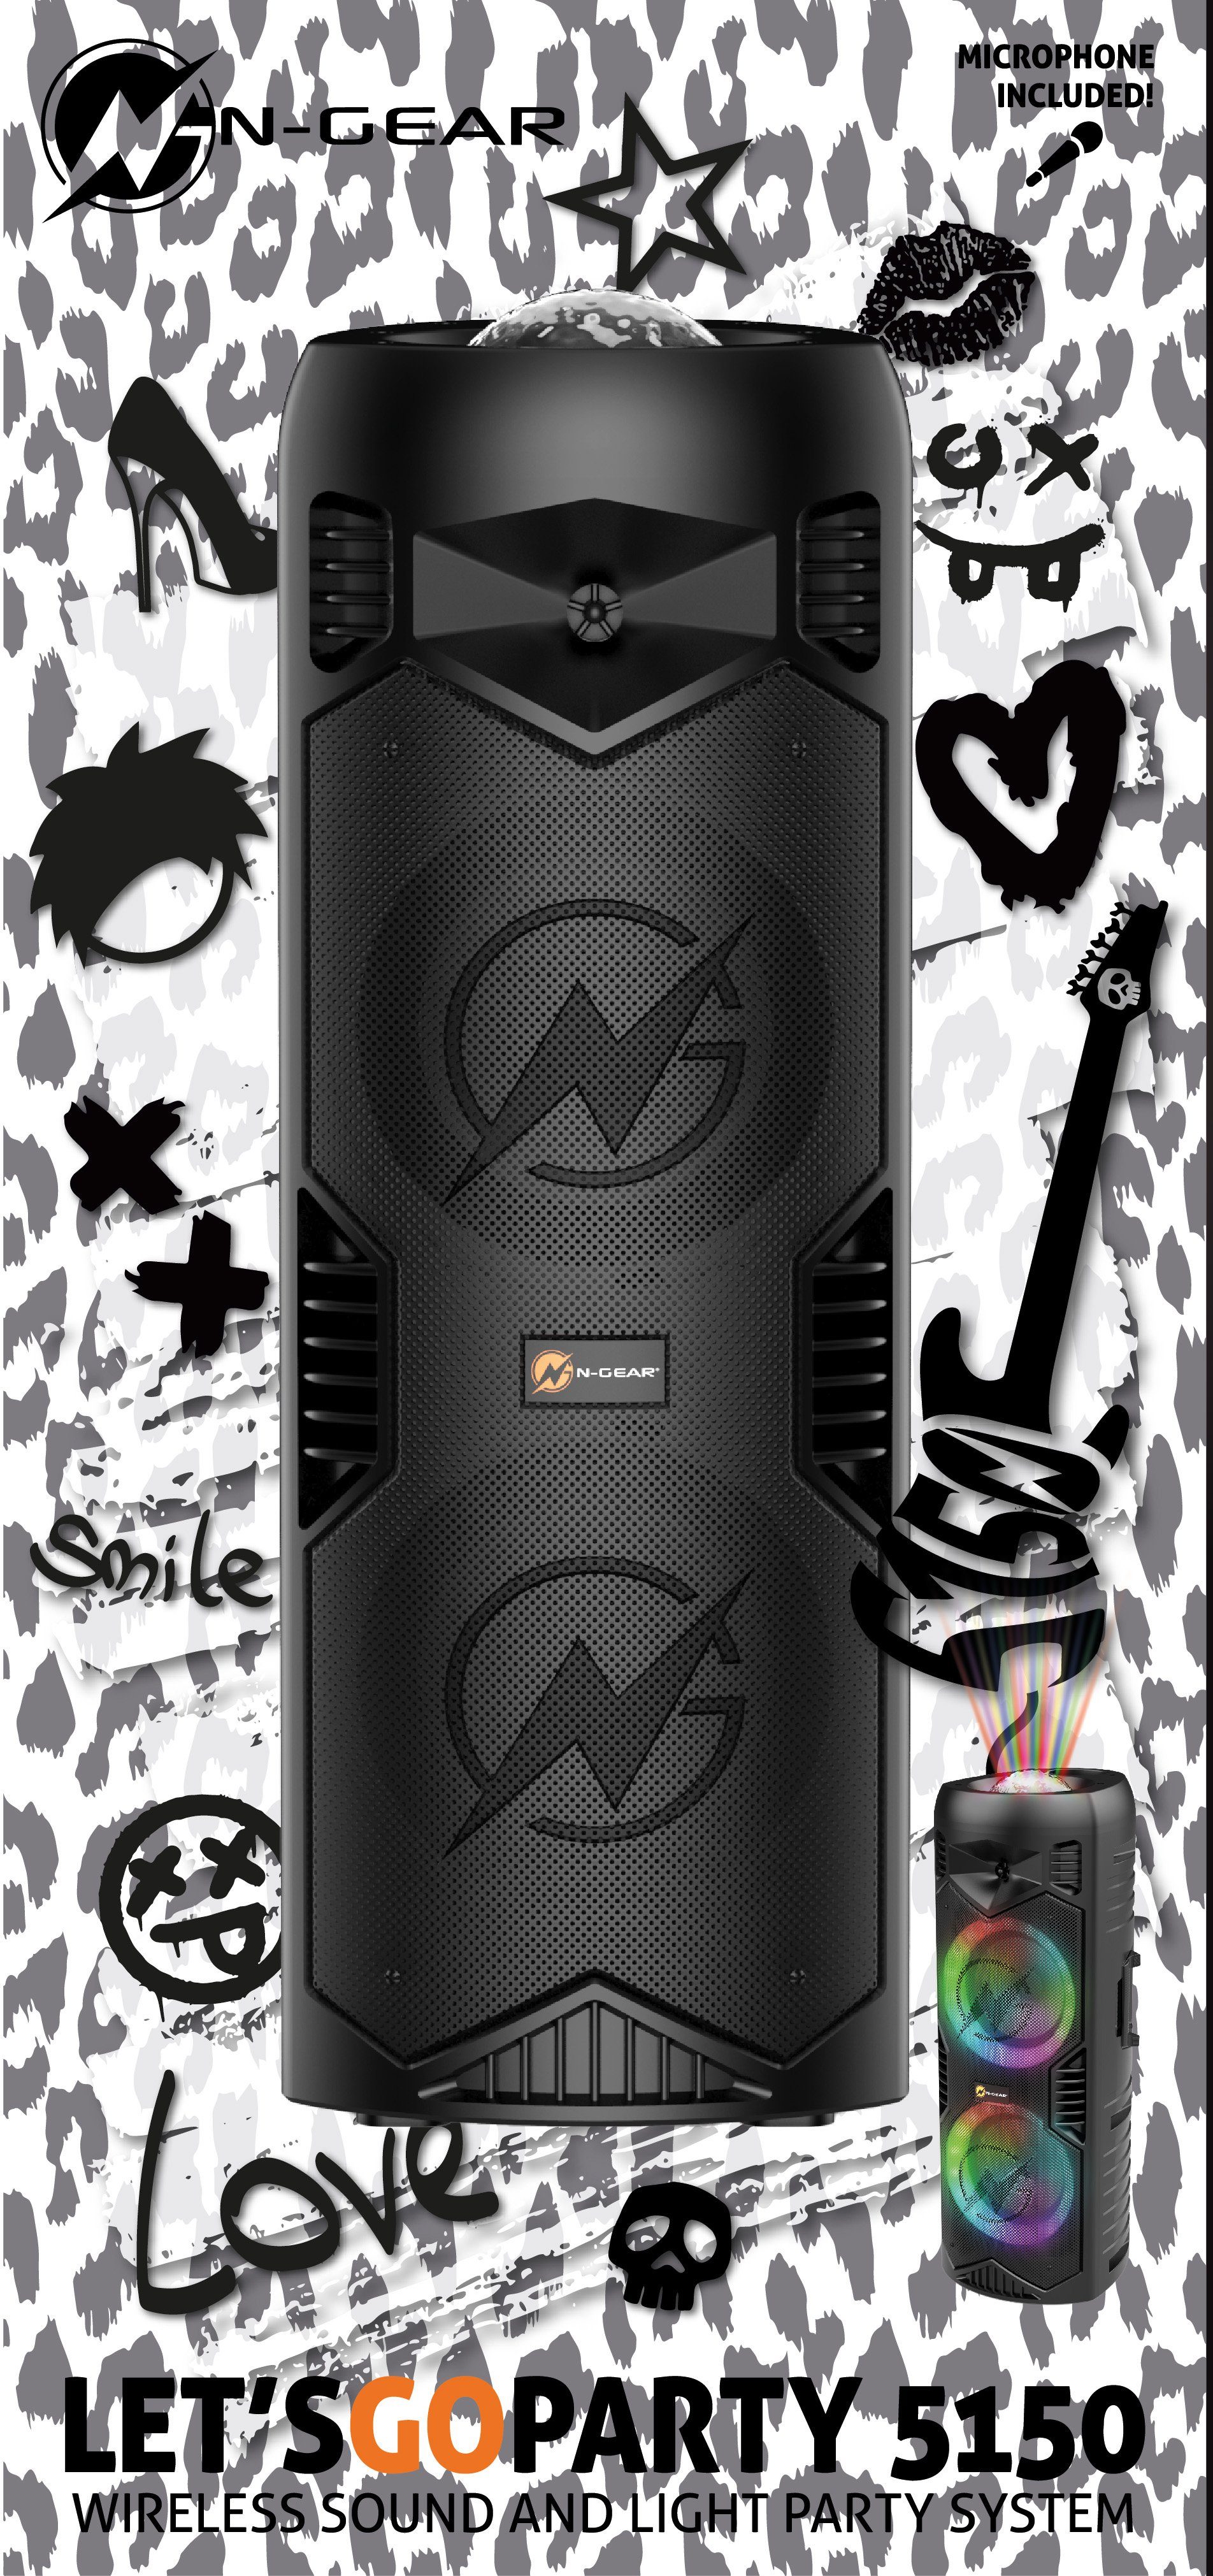 N-GEAR 5150 Drahtloses Party Fernbedienung, enthalten) (inklusive Black Bluetooth-Lautsprecher Go Mikrofon Let's im Lieferumfang